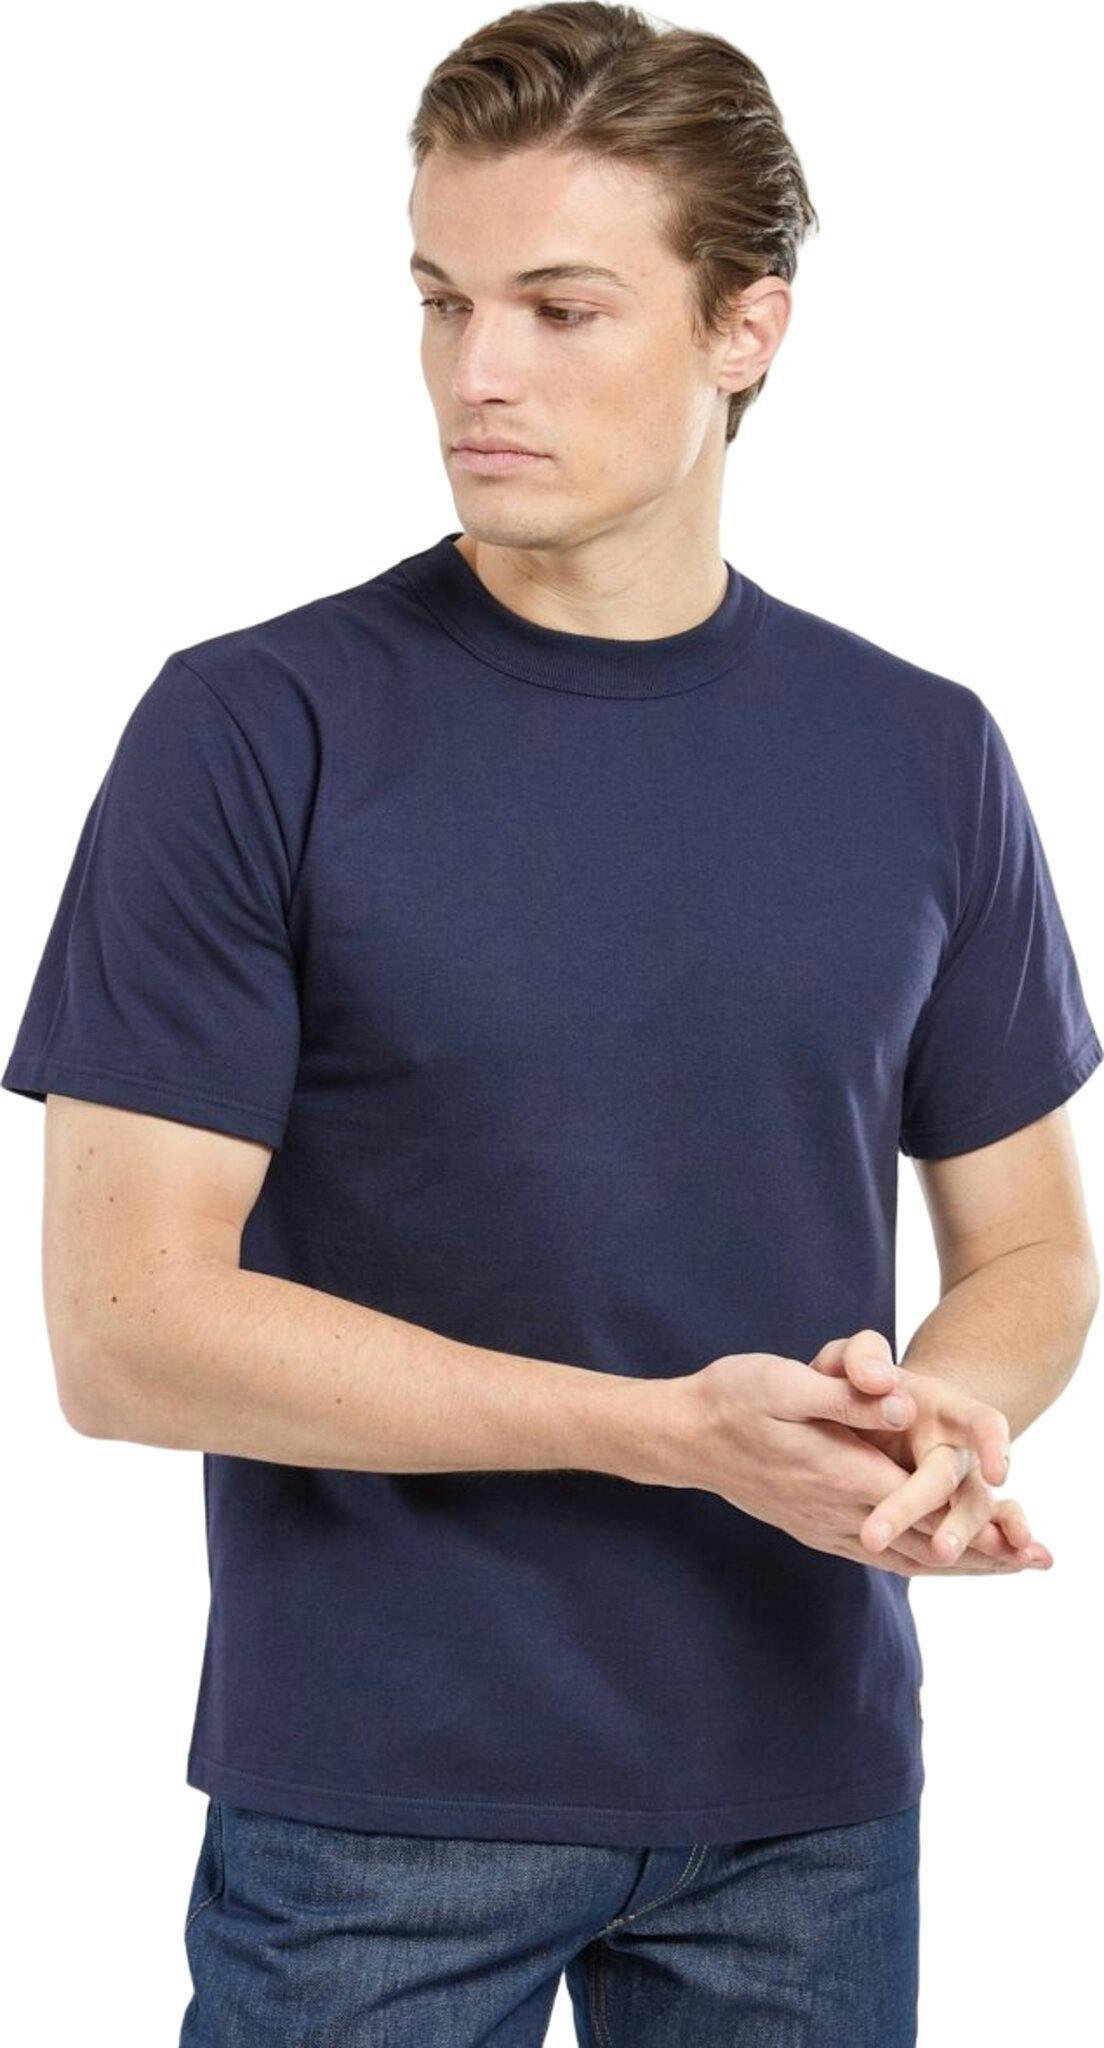 Product image for Héritage T-shirt - Men's